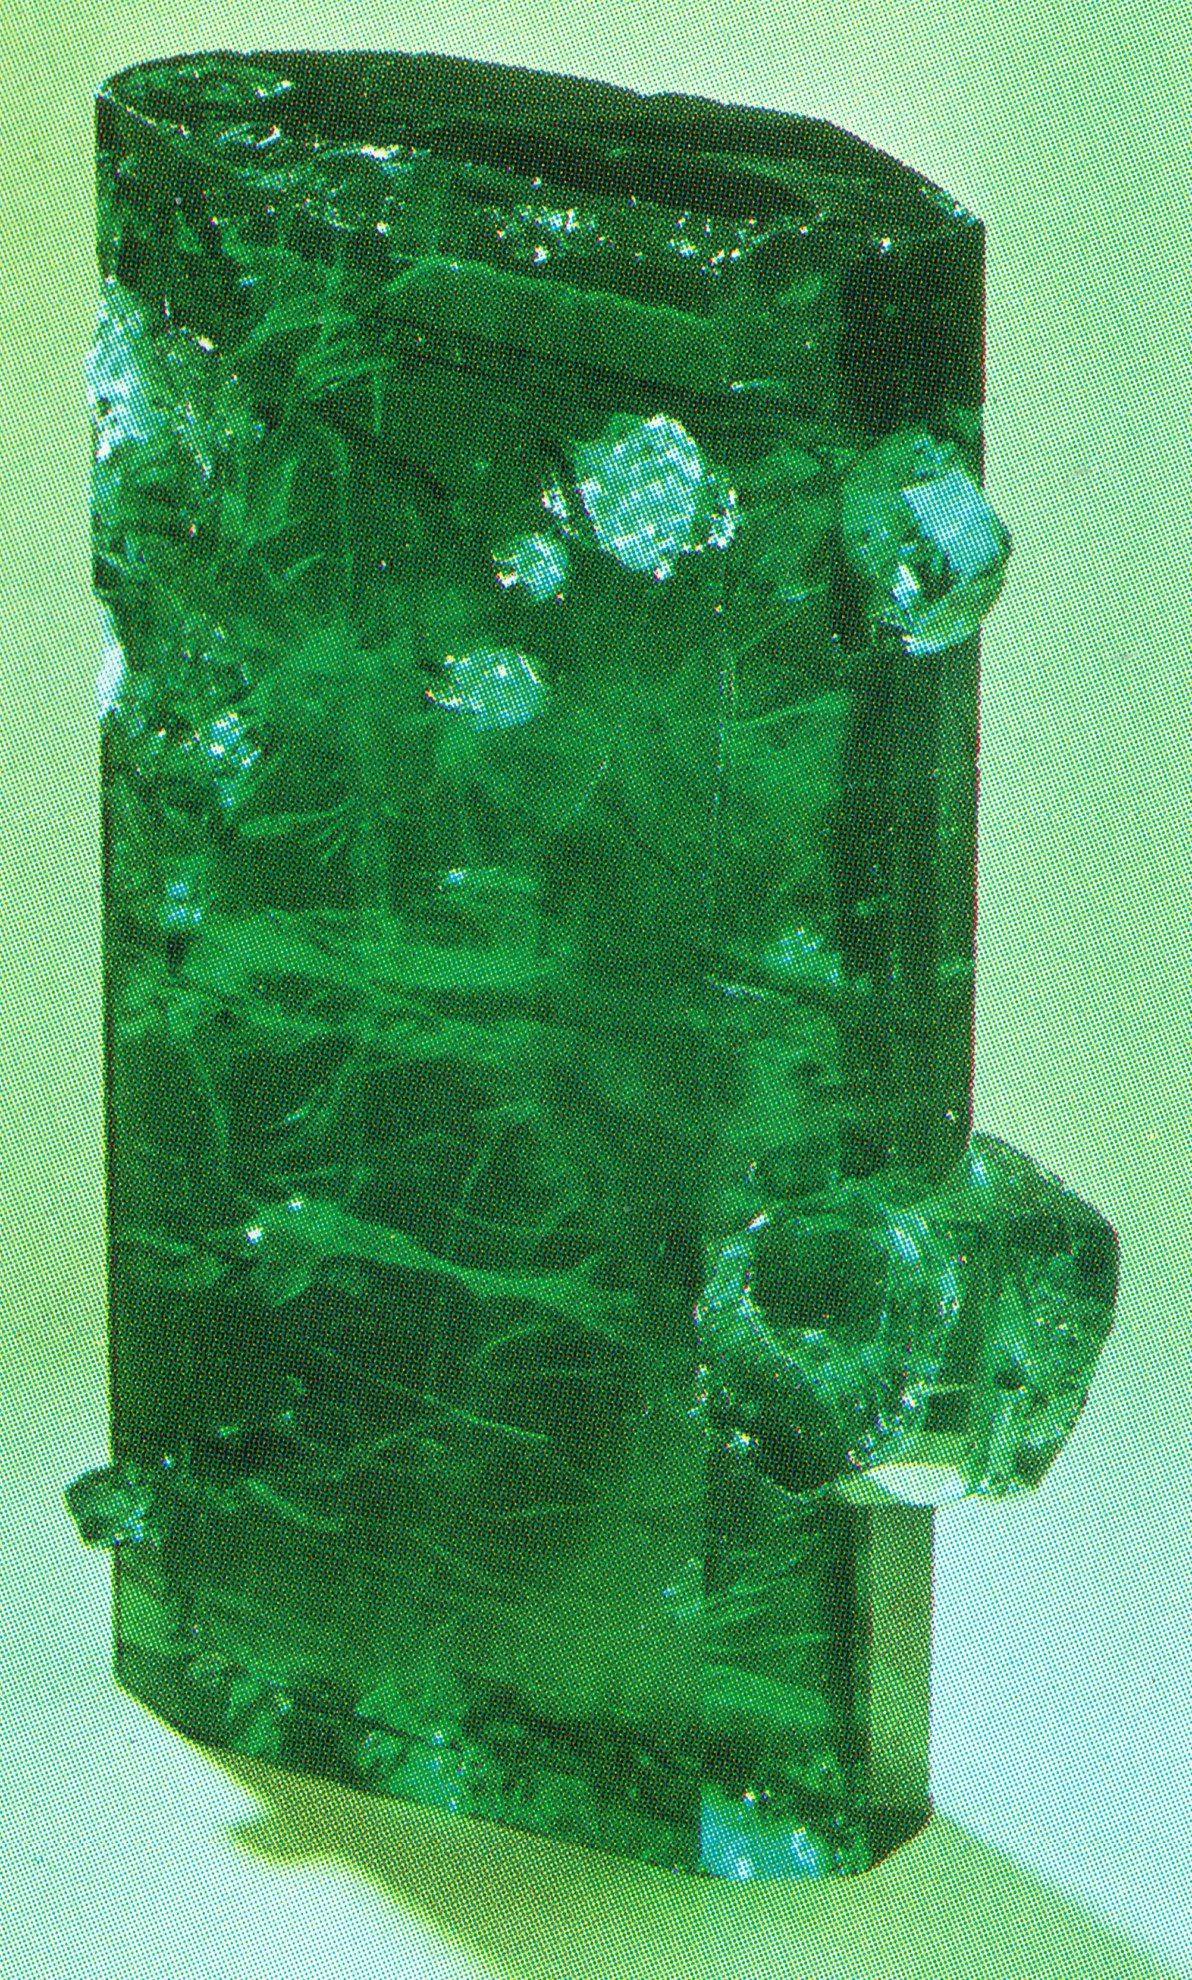 Gilson synthetic emerald crystal